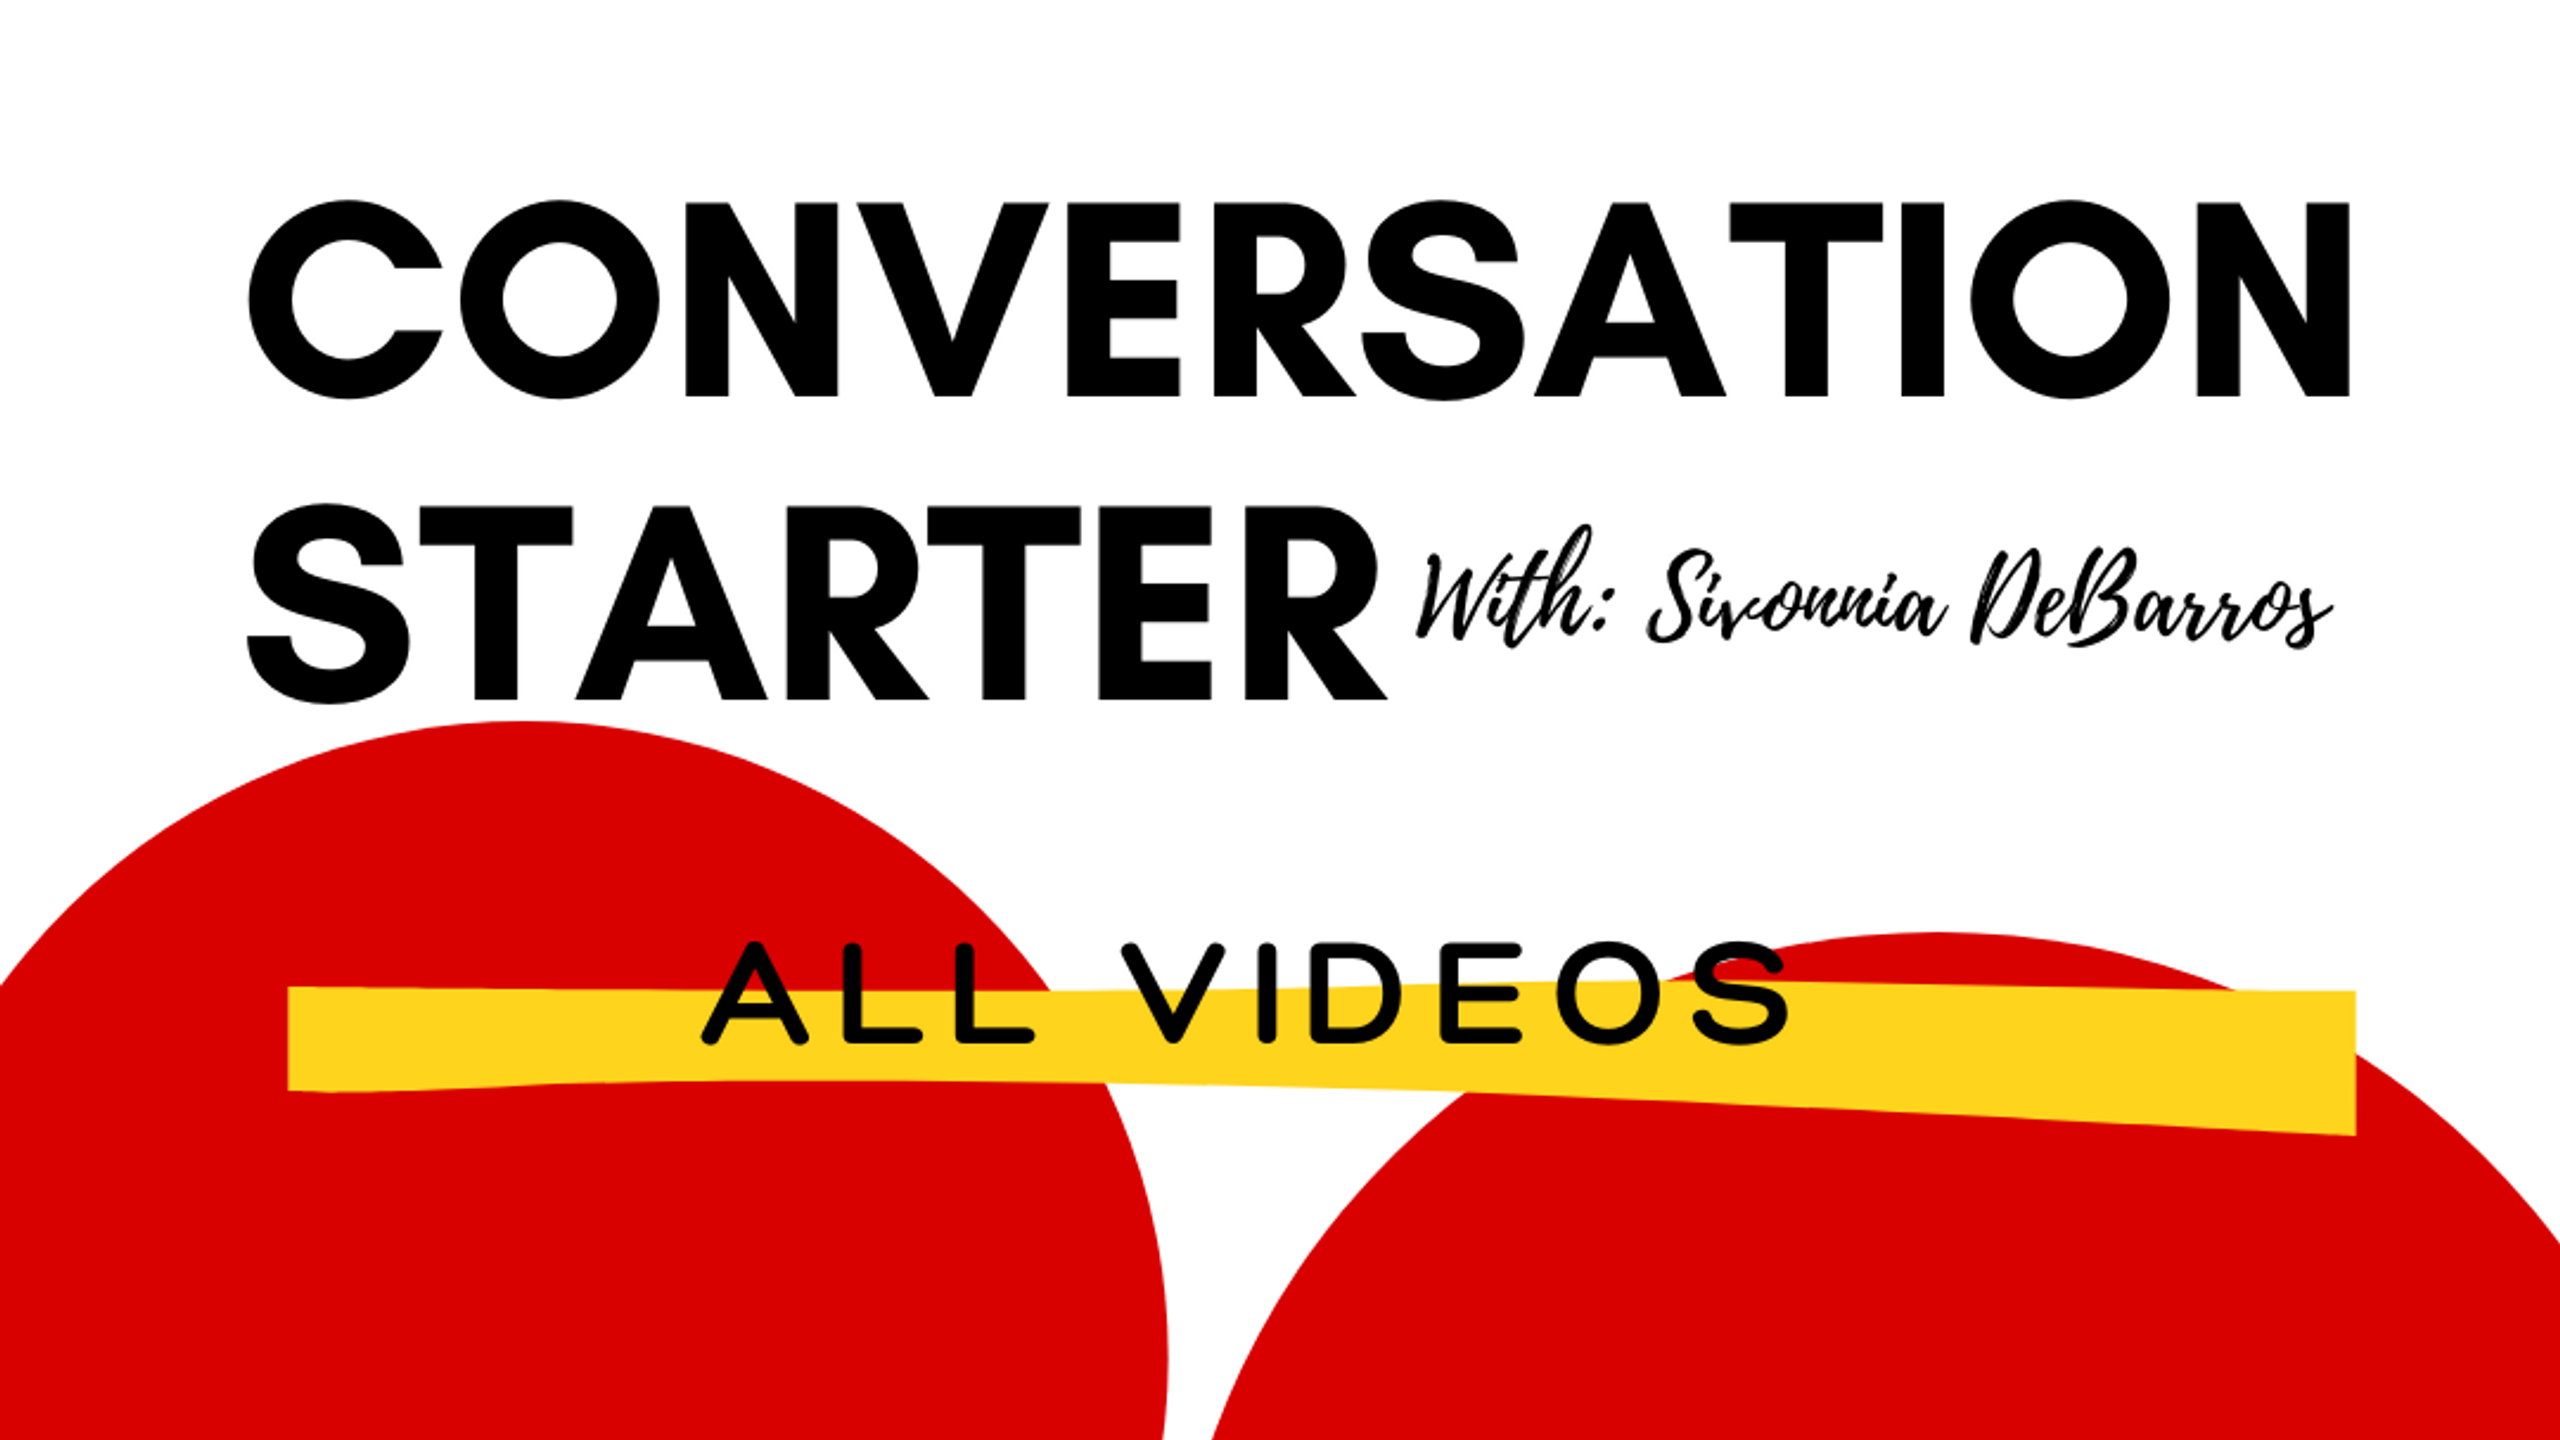 Conversation Starter: Watch All Videos